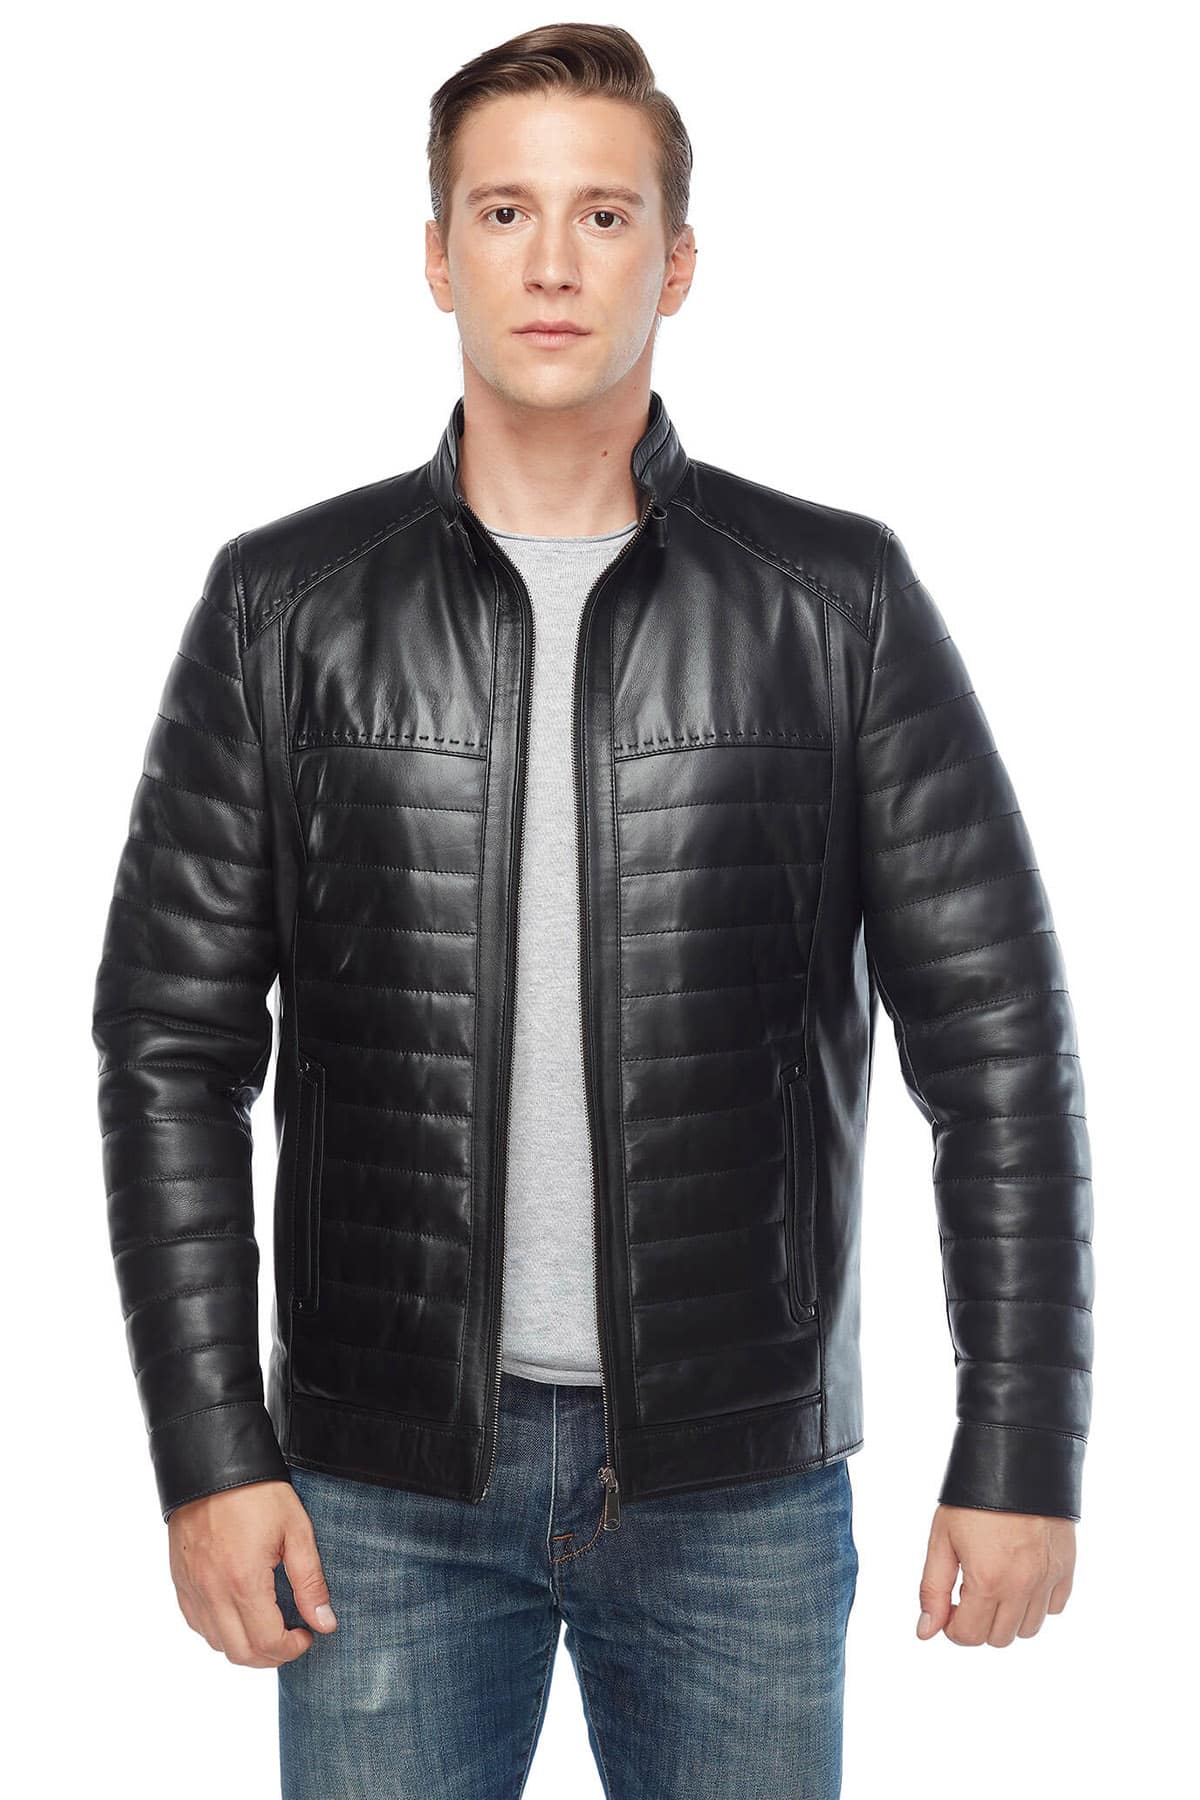 Josh O’Connor Black Genuine Leather Men’s Coat2